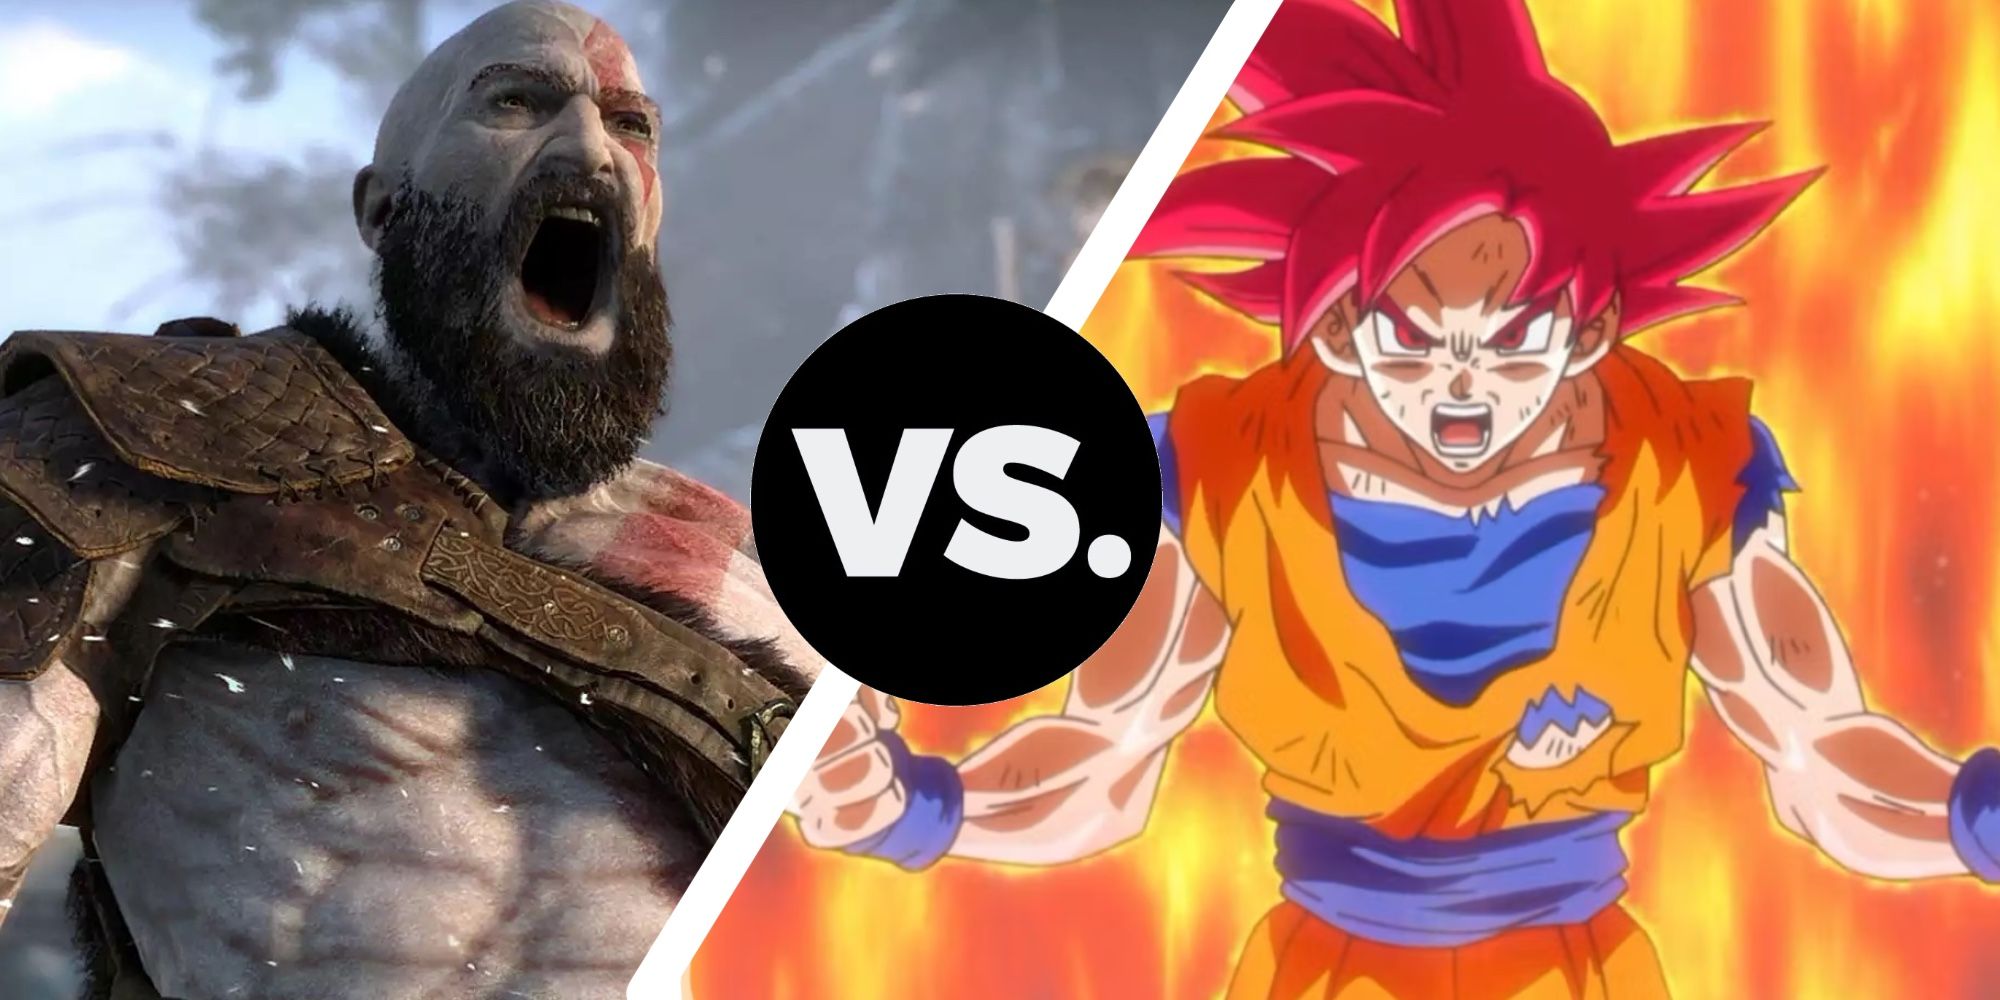 Kratos VS Goku